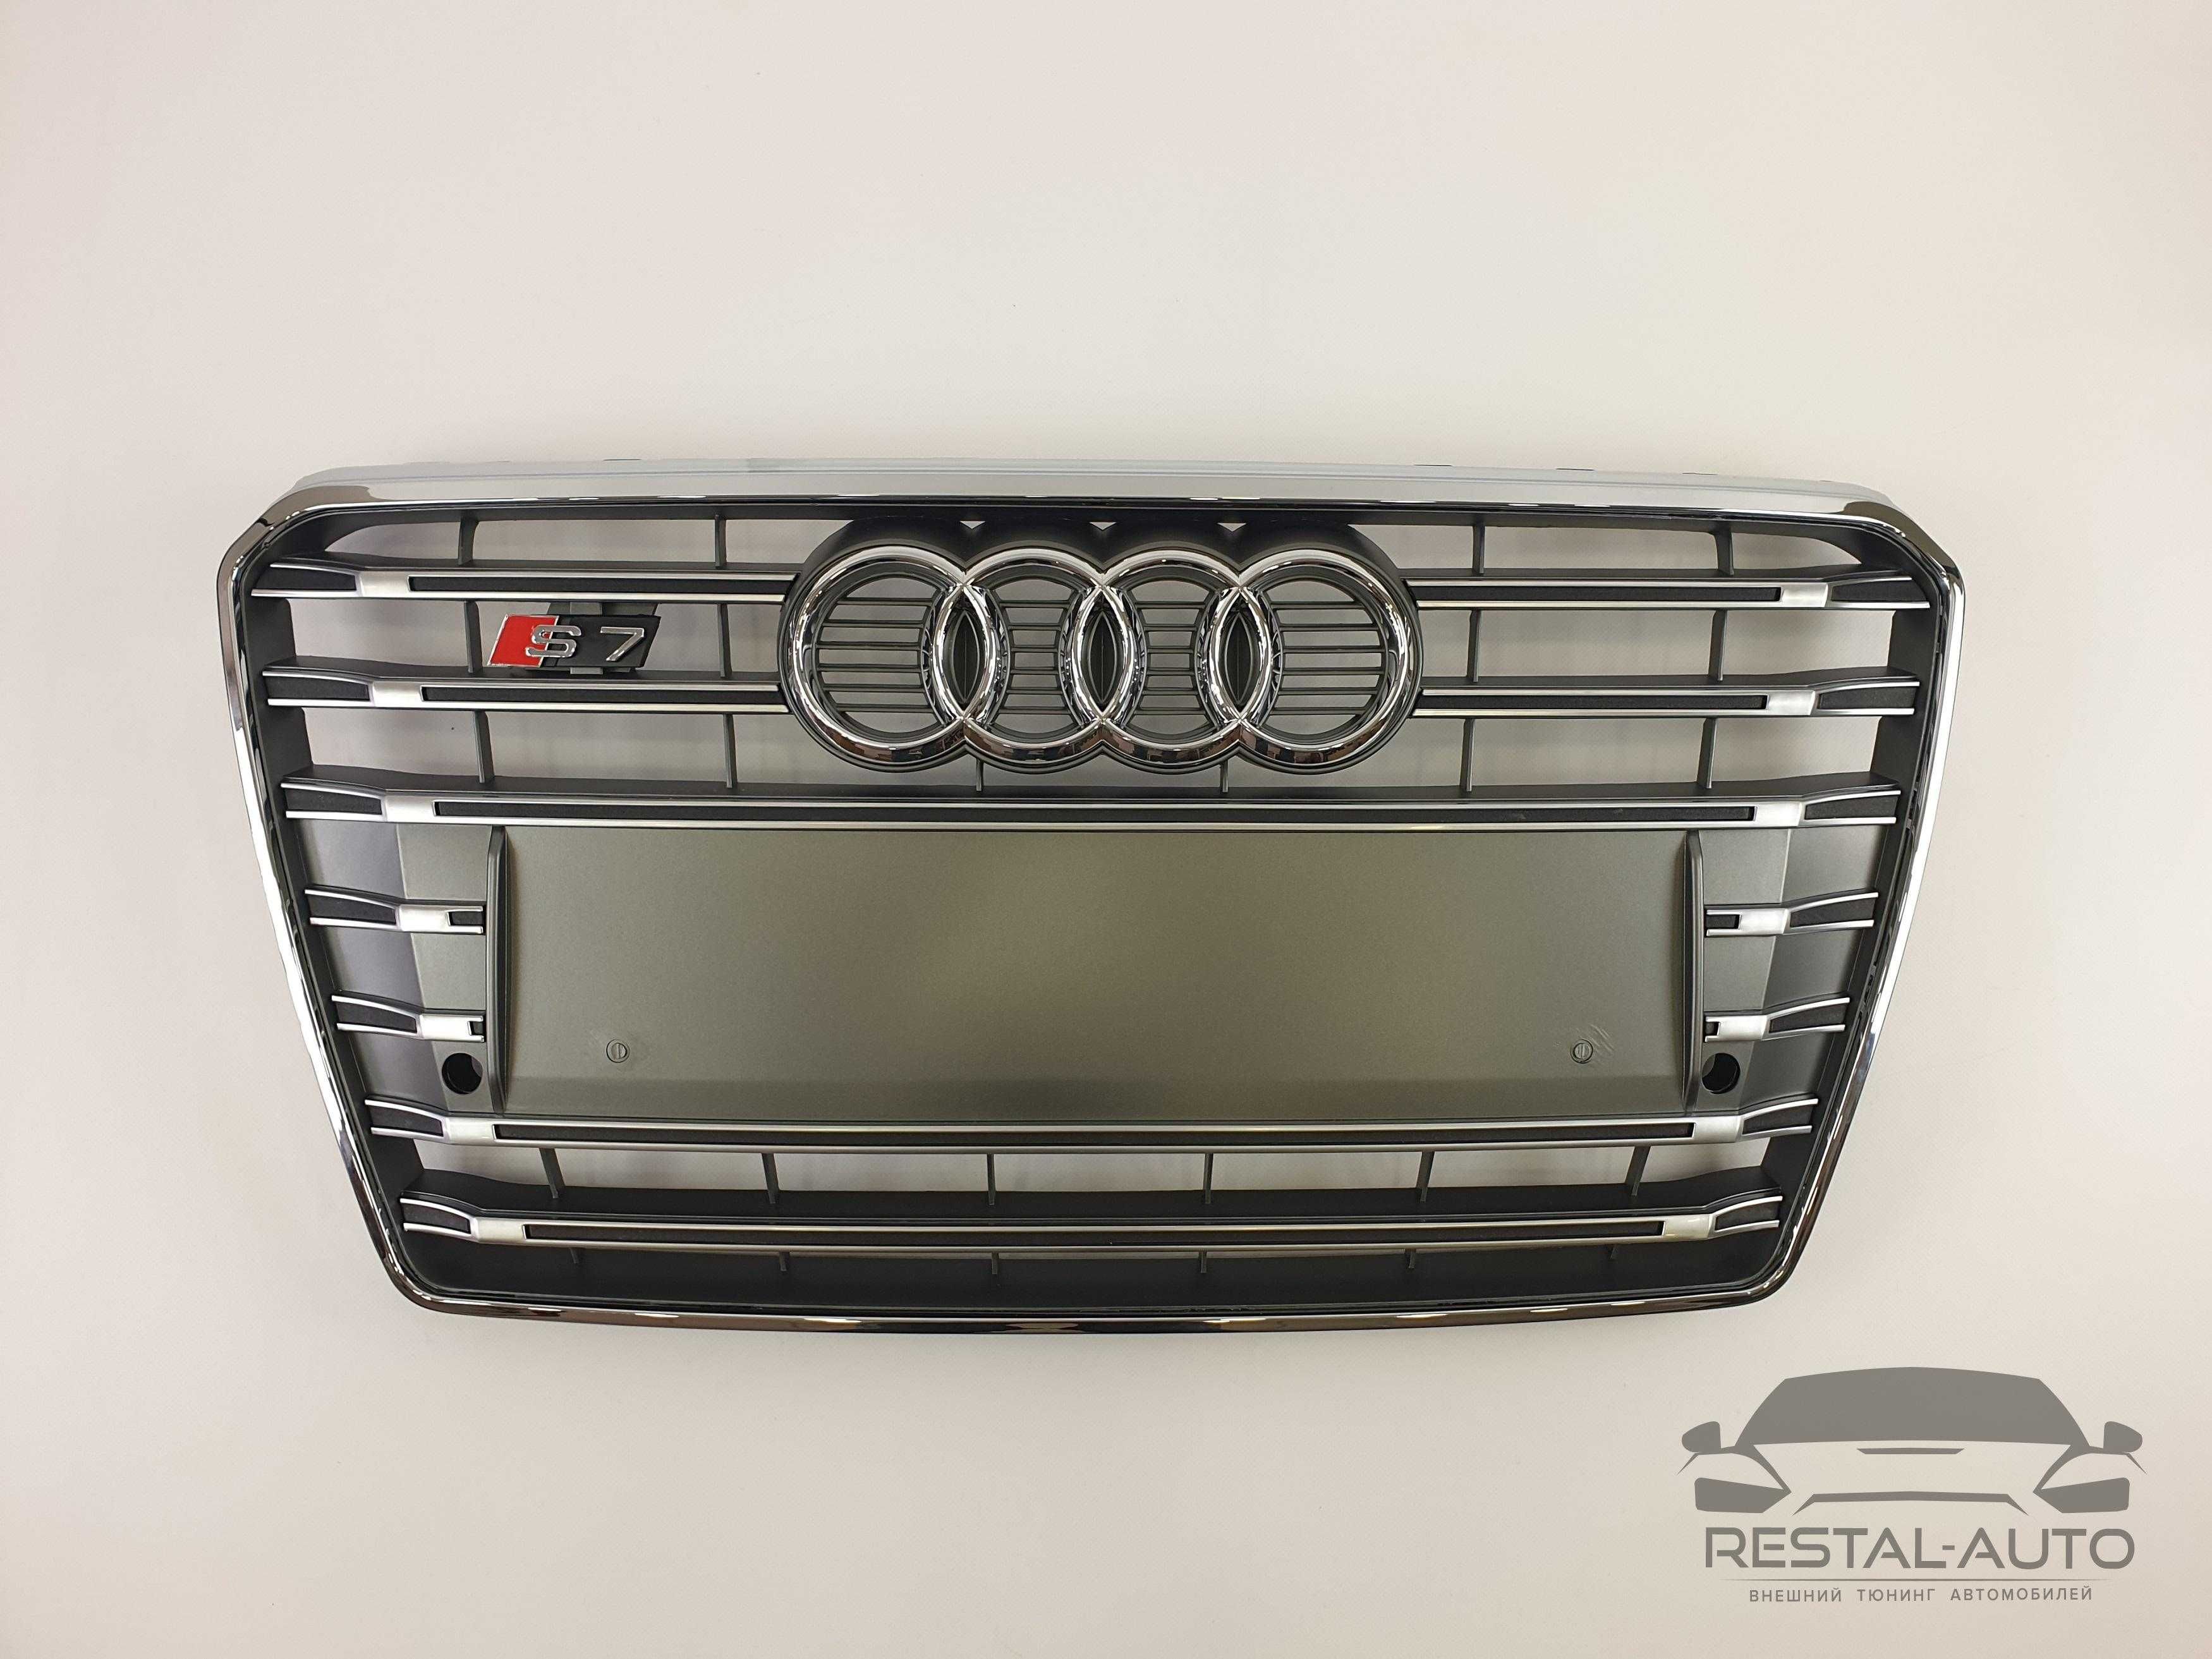 Решетка Радиатора Audi A7 2010-2014г в стиле S-line